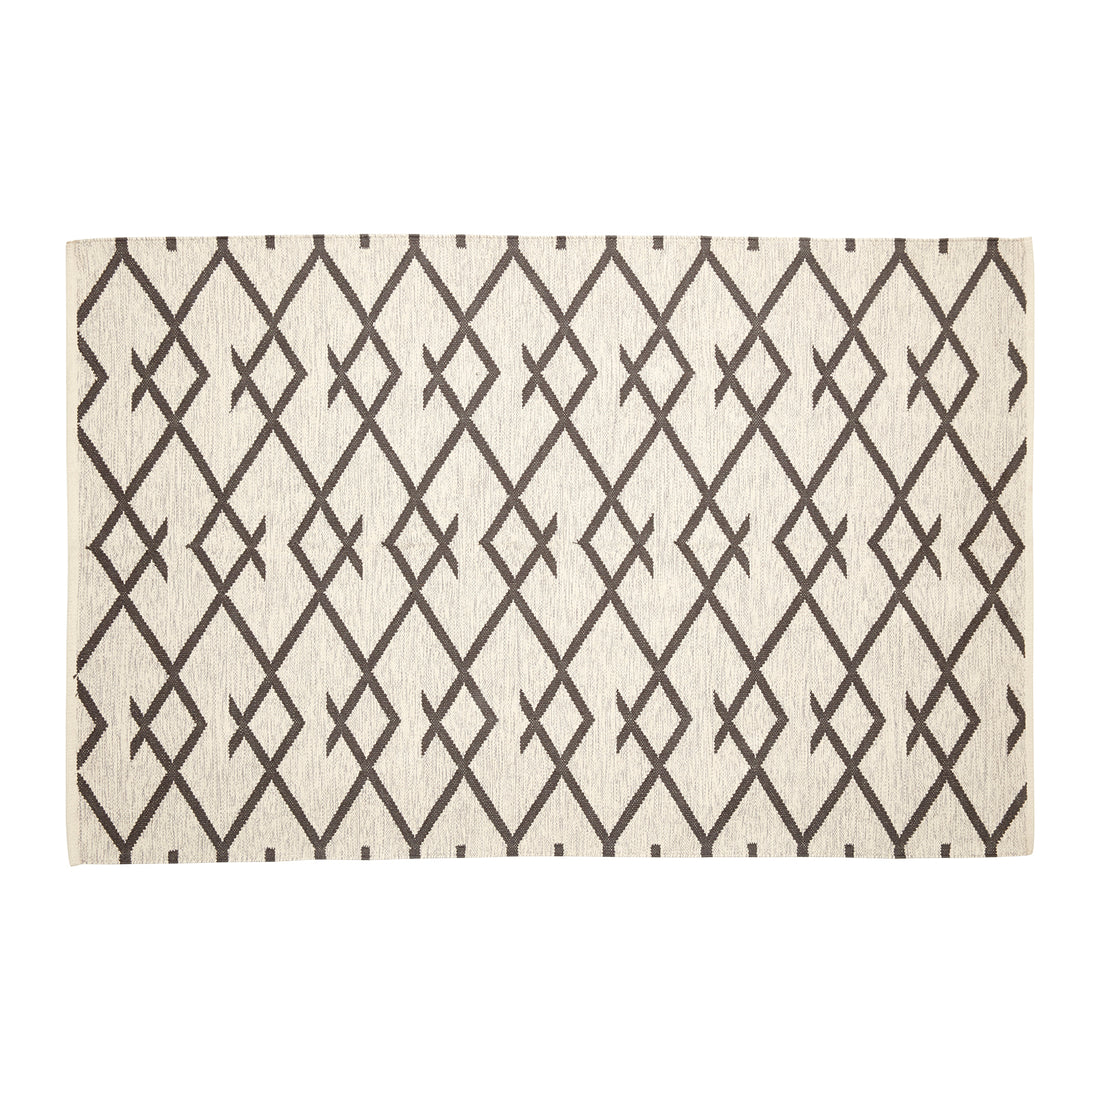 Hübsch - Teppich, gewebt, Baumwolle, natur/grau - 120×180 cm